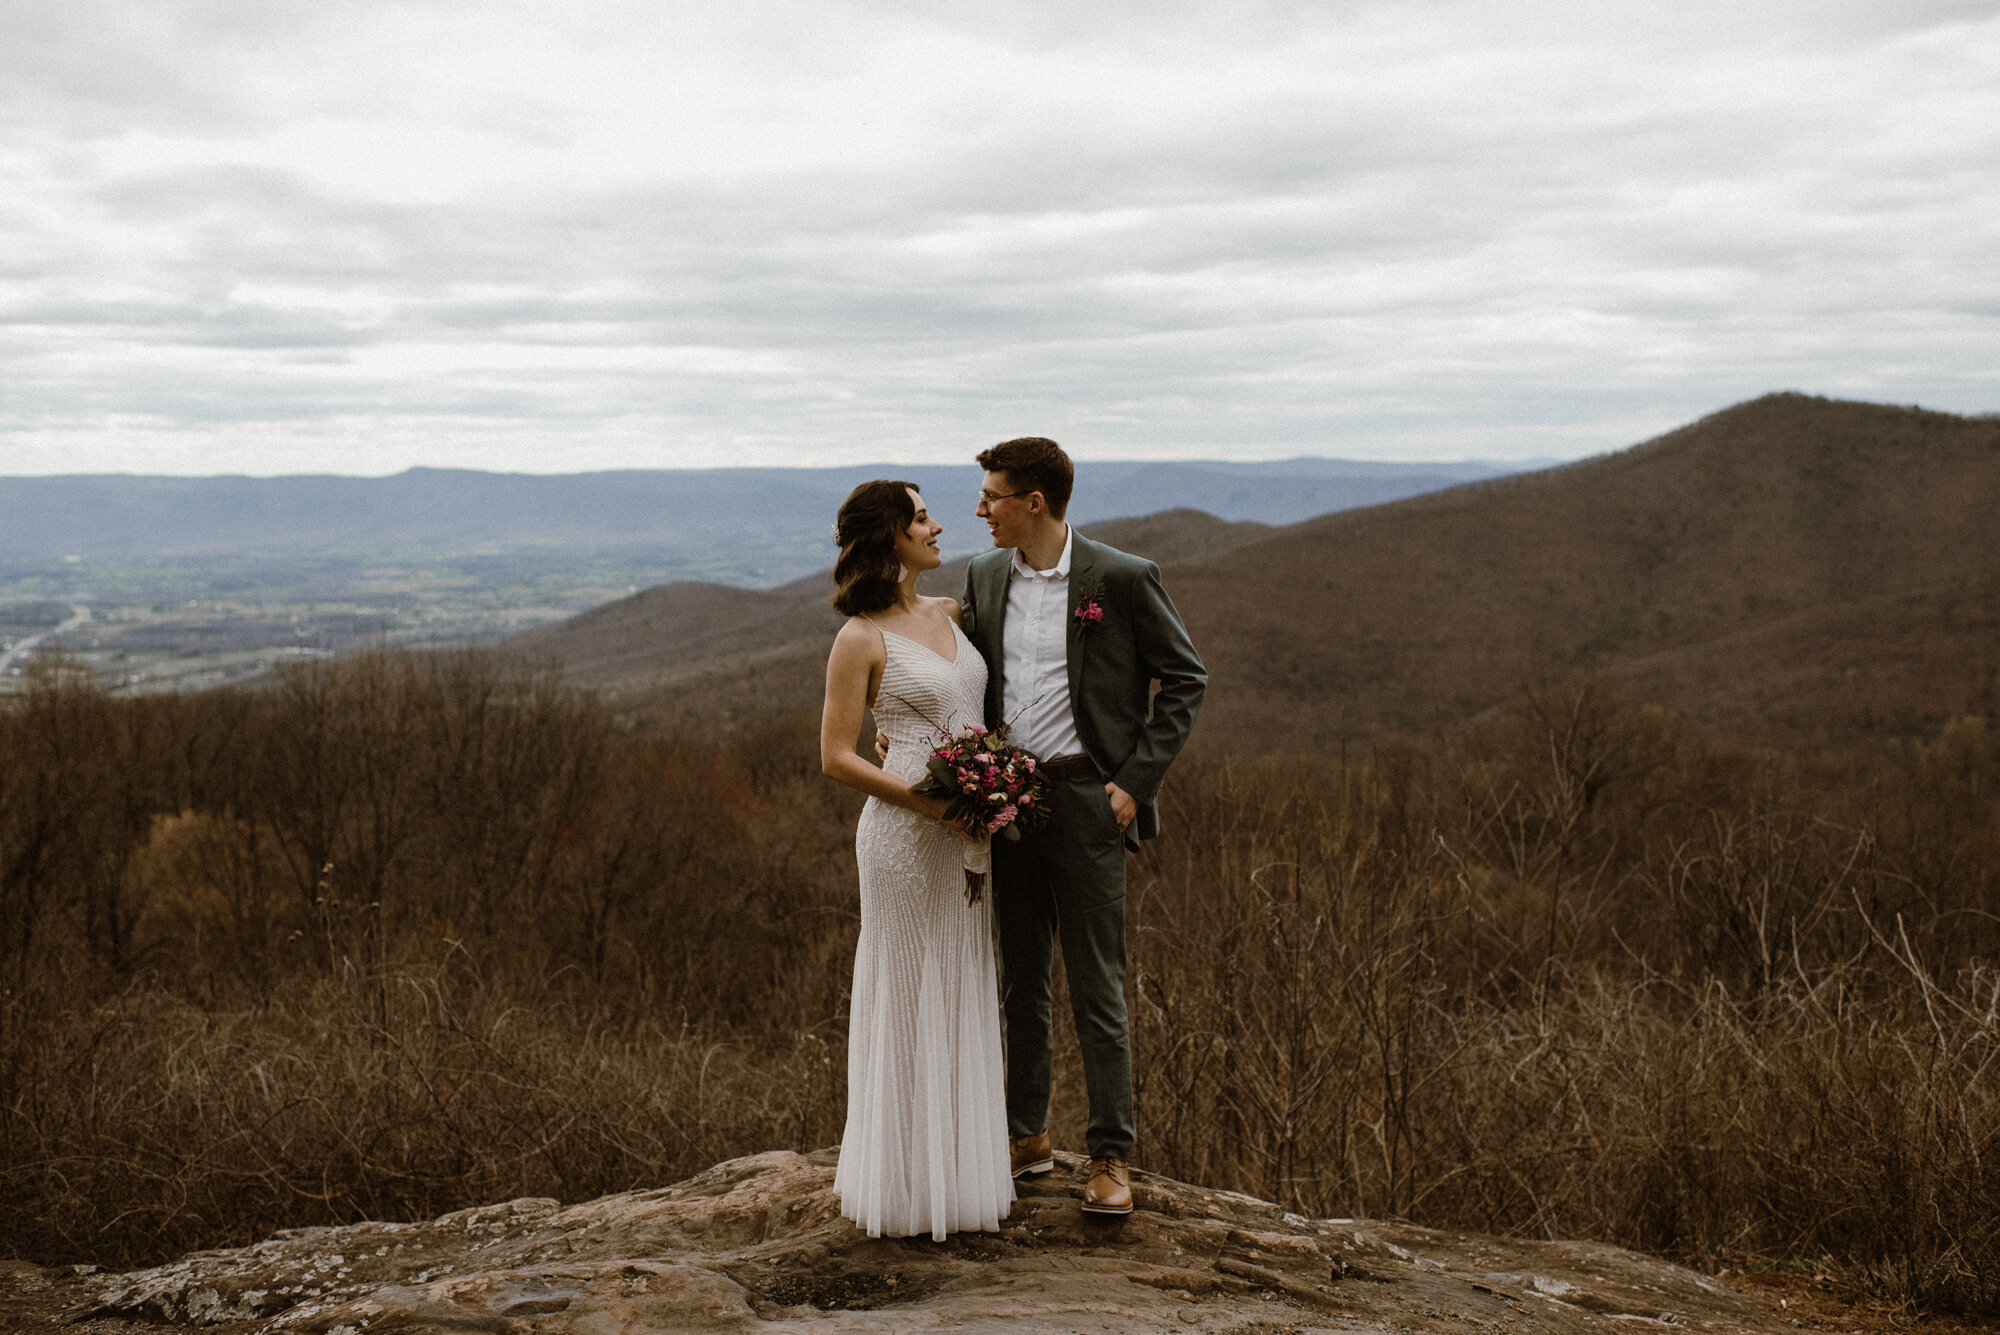 Elopement during Covid-19 - Eloping during Coronavirus - Shenandoah National Park Elopement - Blue Ridge Mountain Virginia Wedding - How to Elope in Shenandoah National Park - Mountain Wedding Ideas_47.jpg